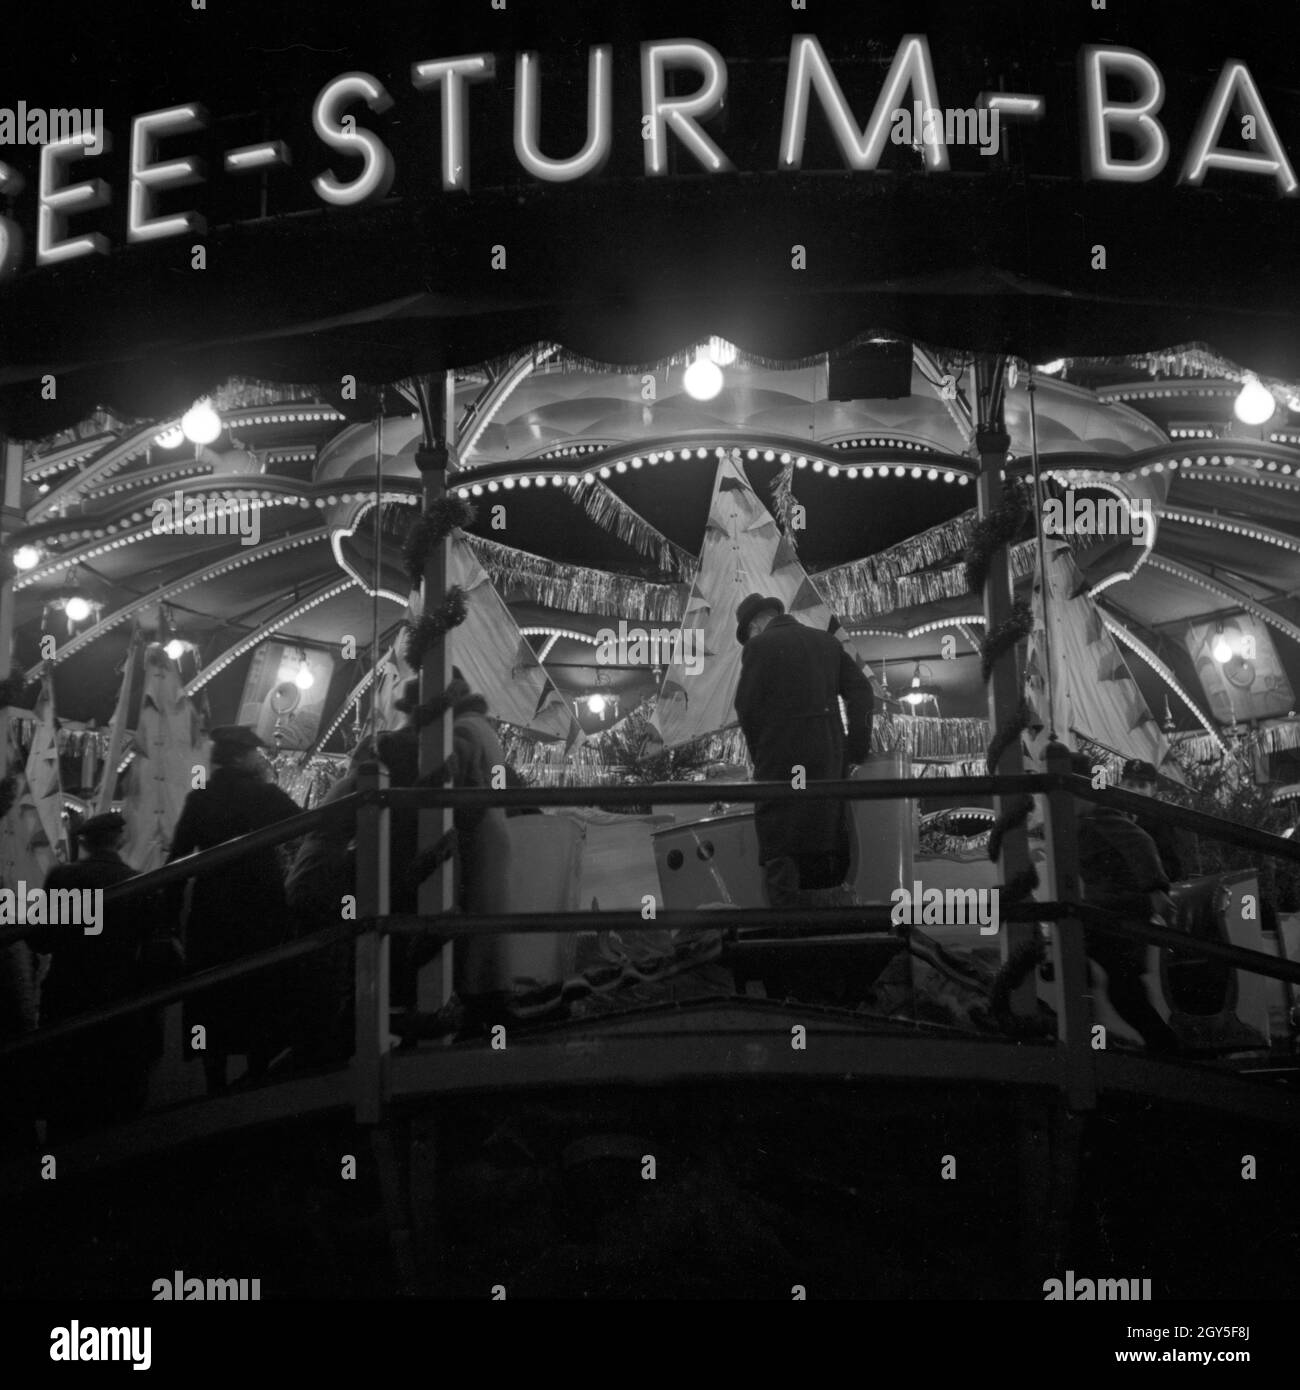 Die vedere Sturm Bahn, ein Fahrgeschäft auf dem Weihnachtsmarkt, Deutschland 1930er Jahre. La tempesta di mare ride, una fiera di attrazione a Berlino il mercato di natale, Germania 1930s. Foto Stock